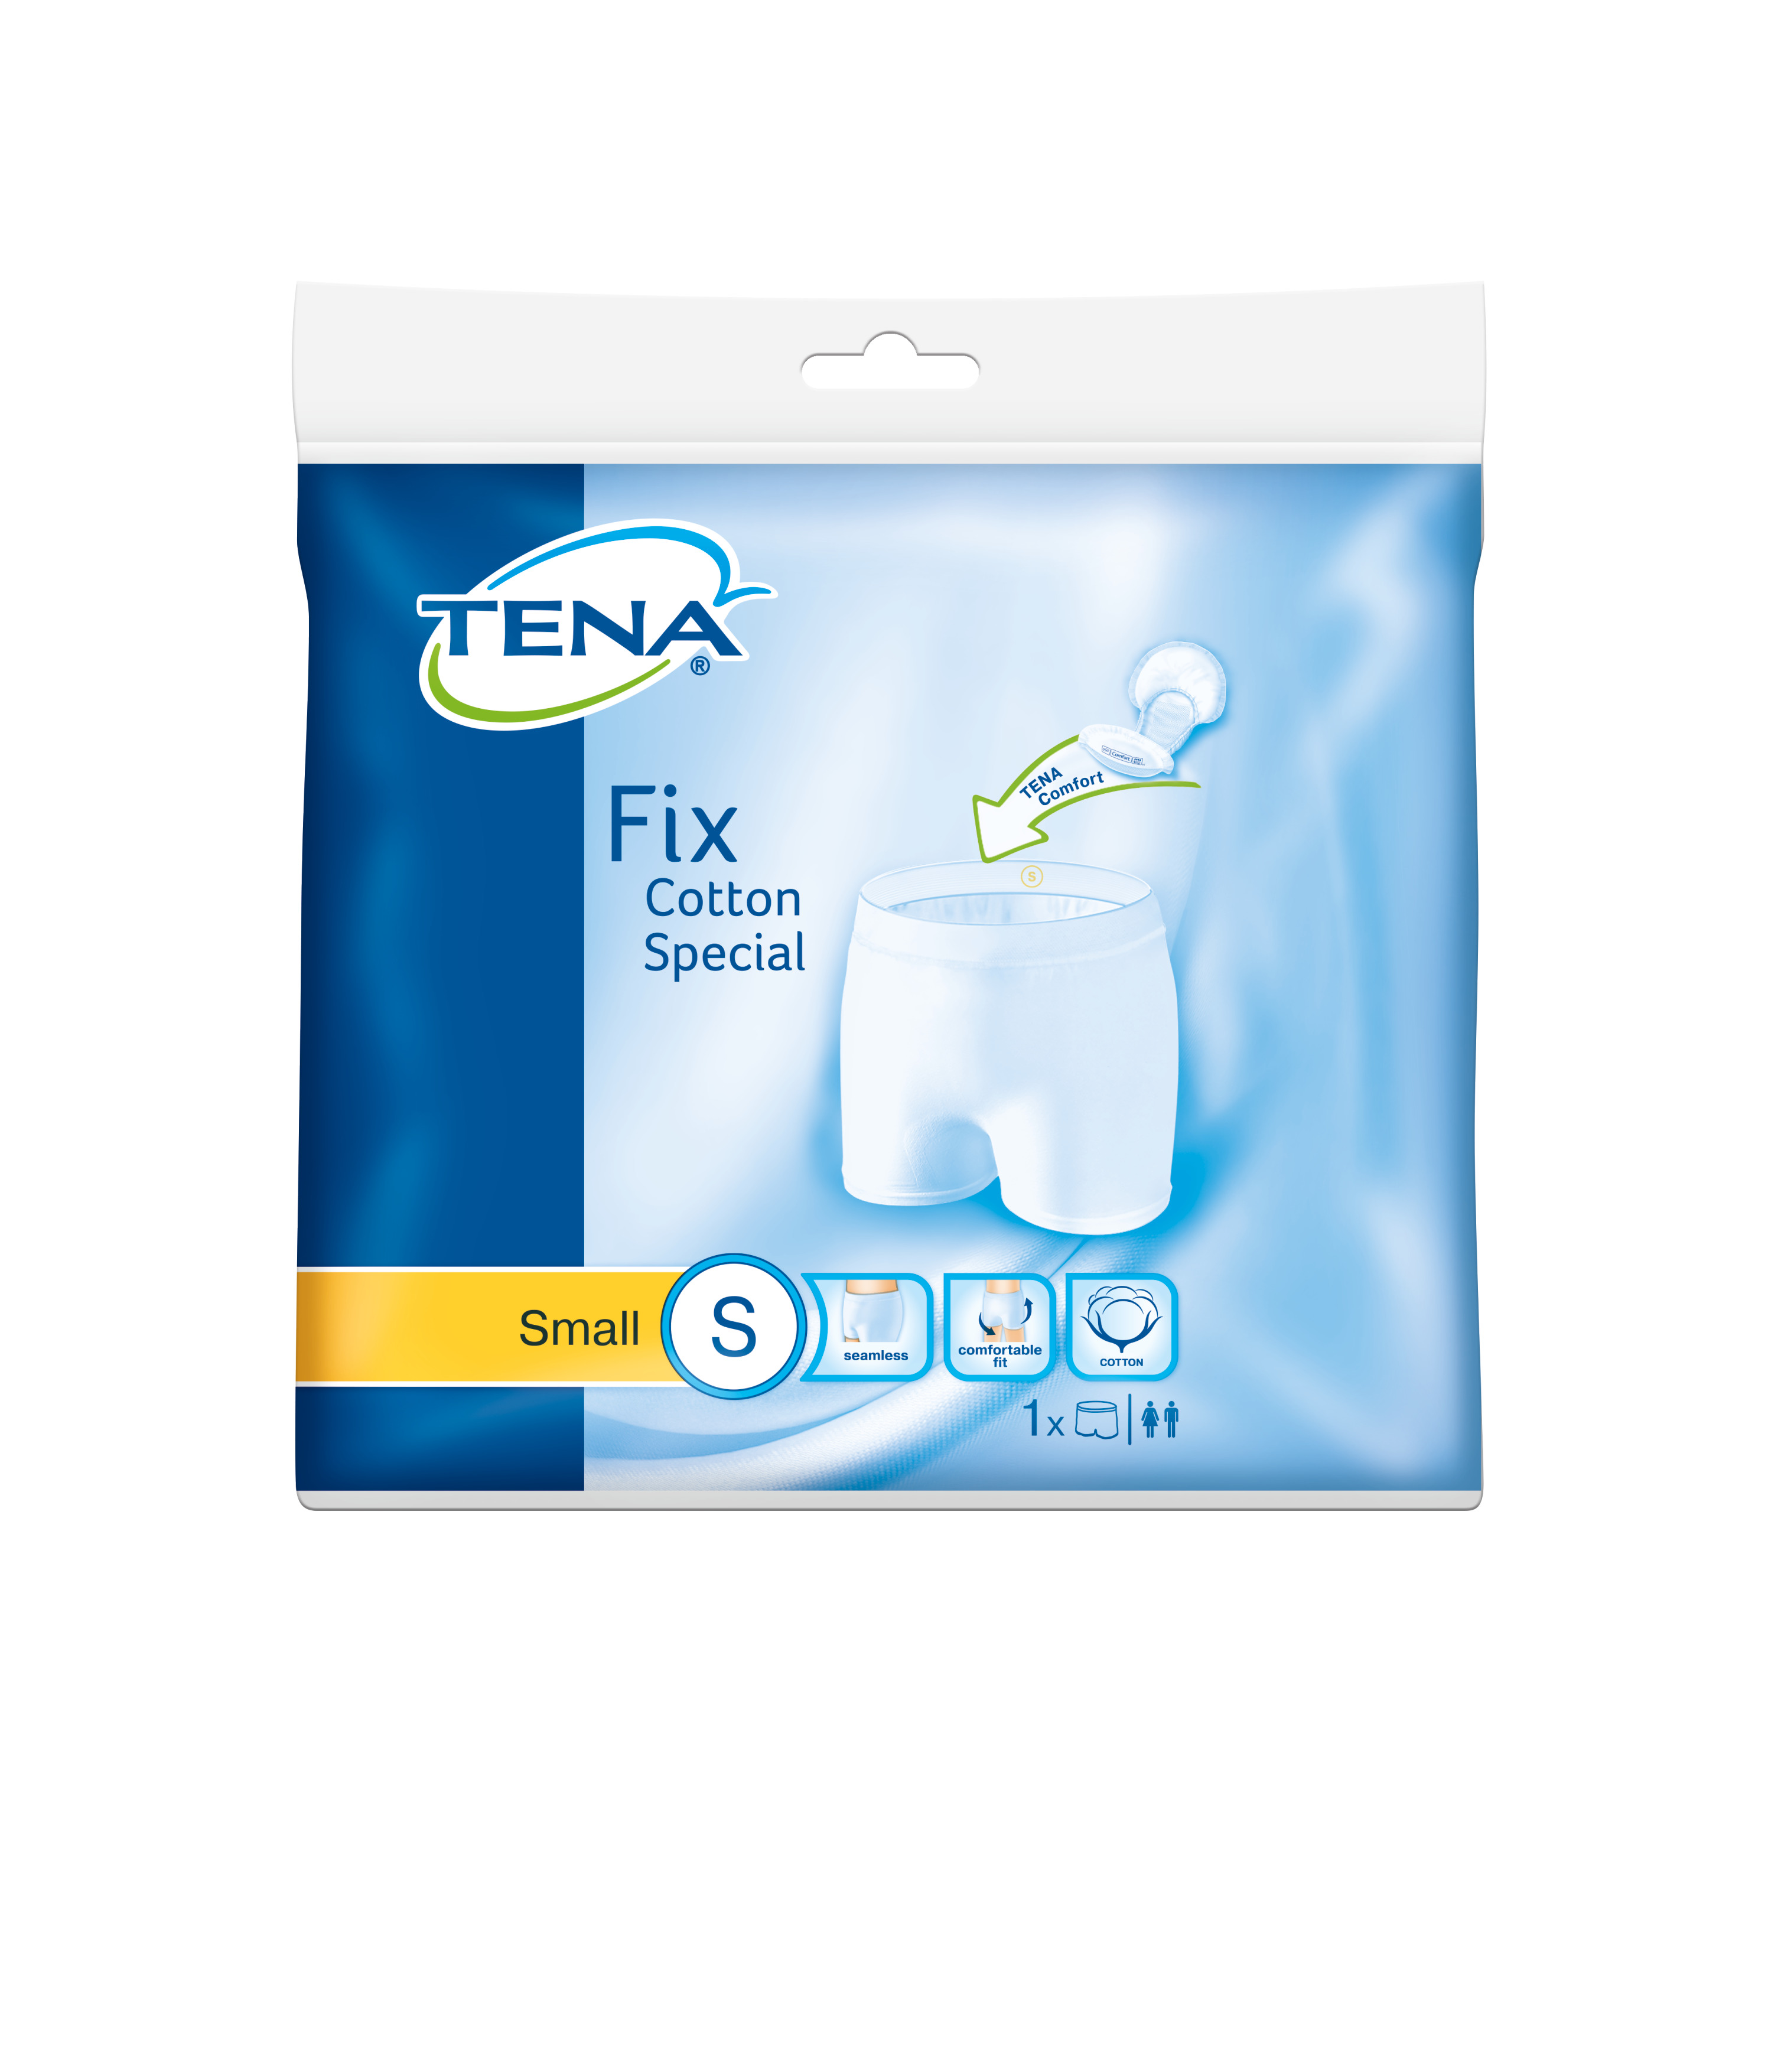 Tena Fix Cotton Special S, Størrelse S, 1 stk.